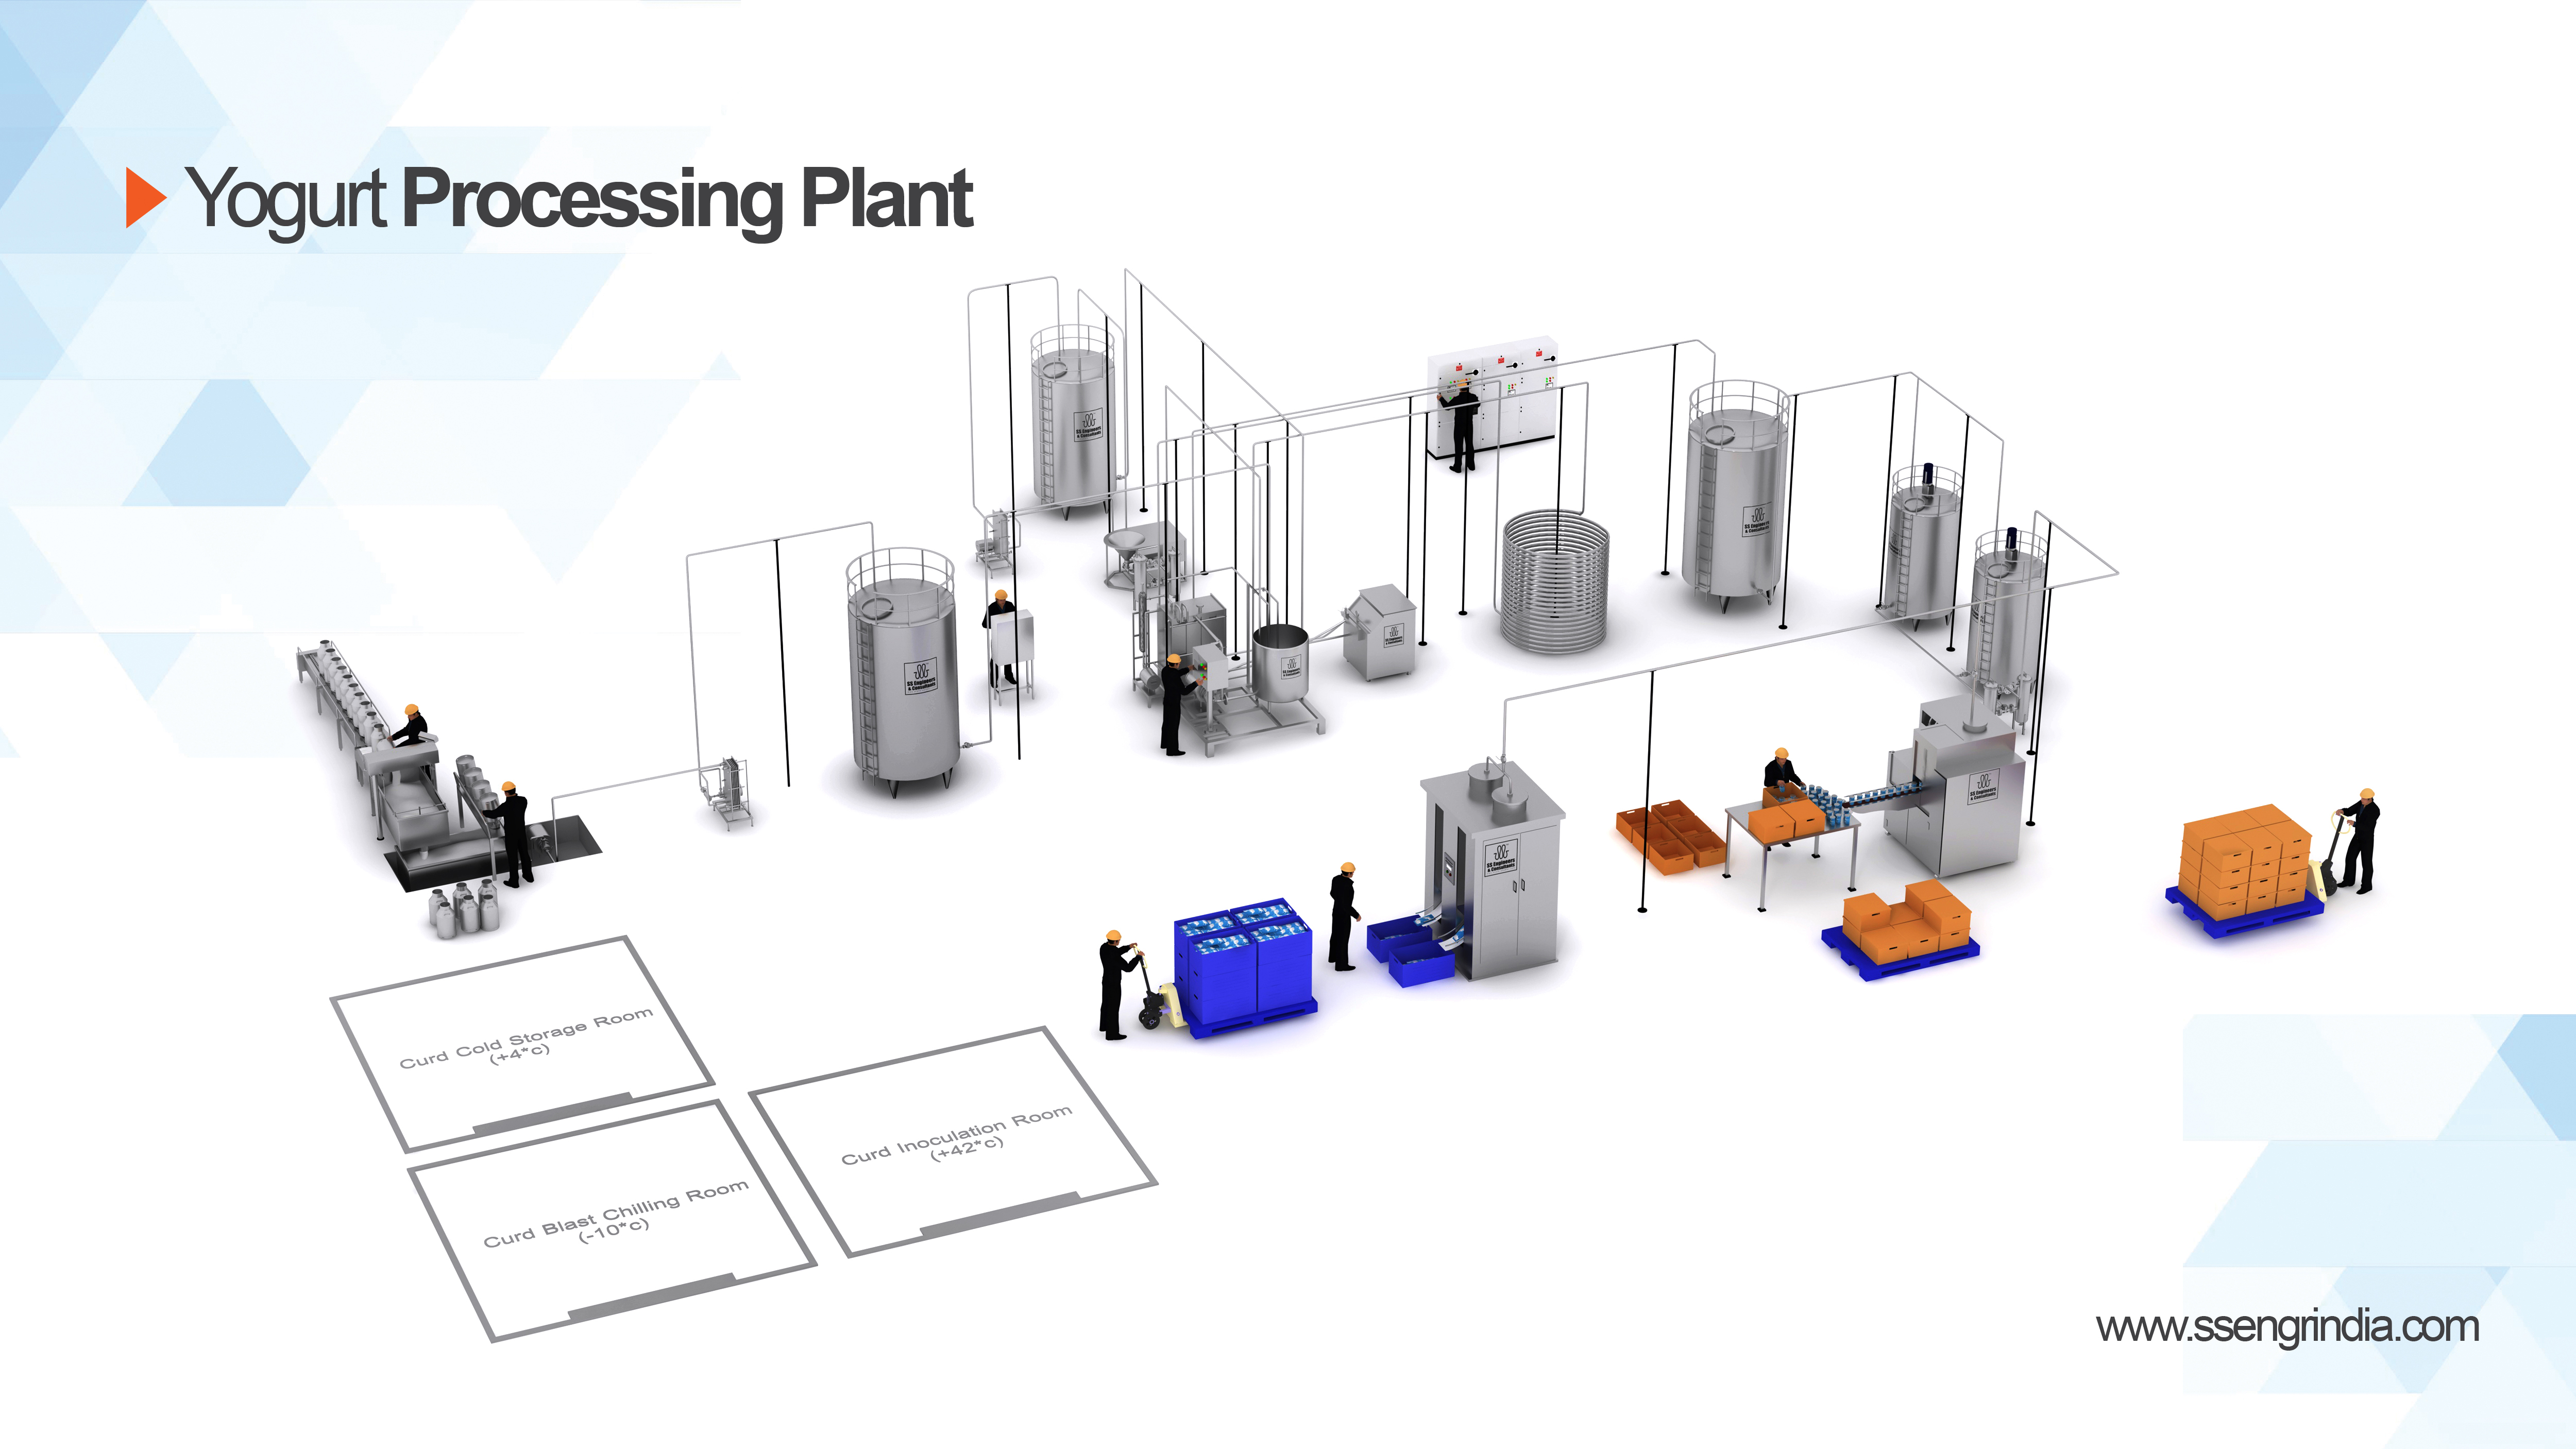 Yogurt Processing Plant